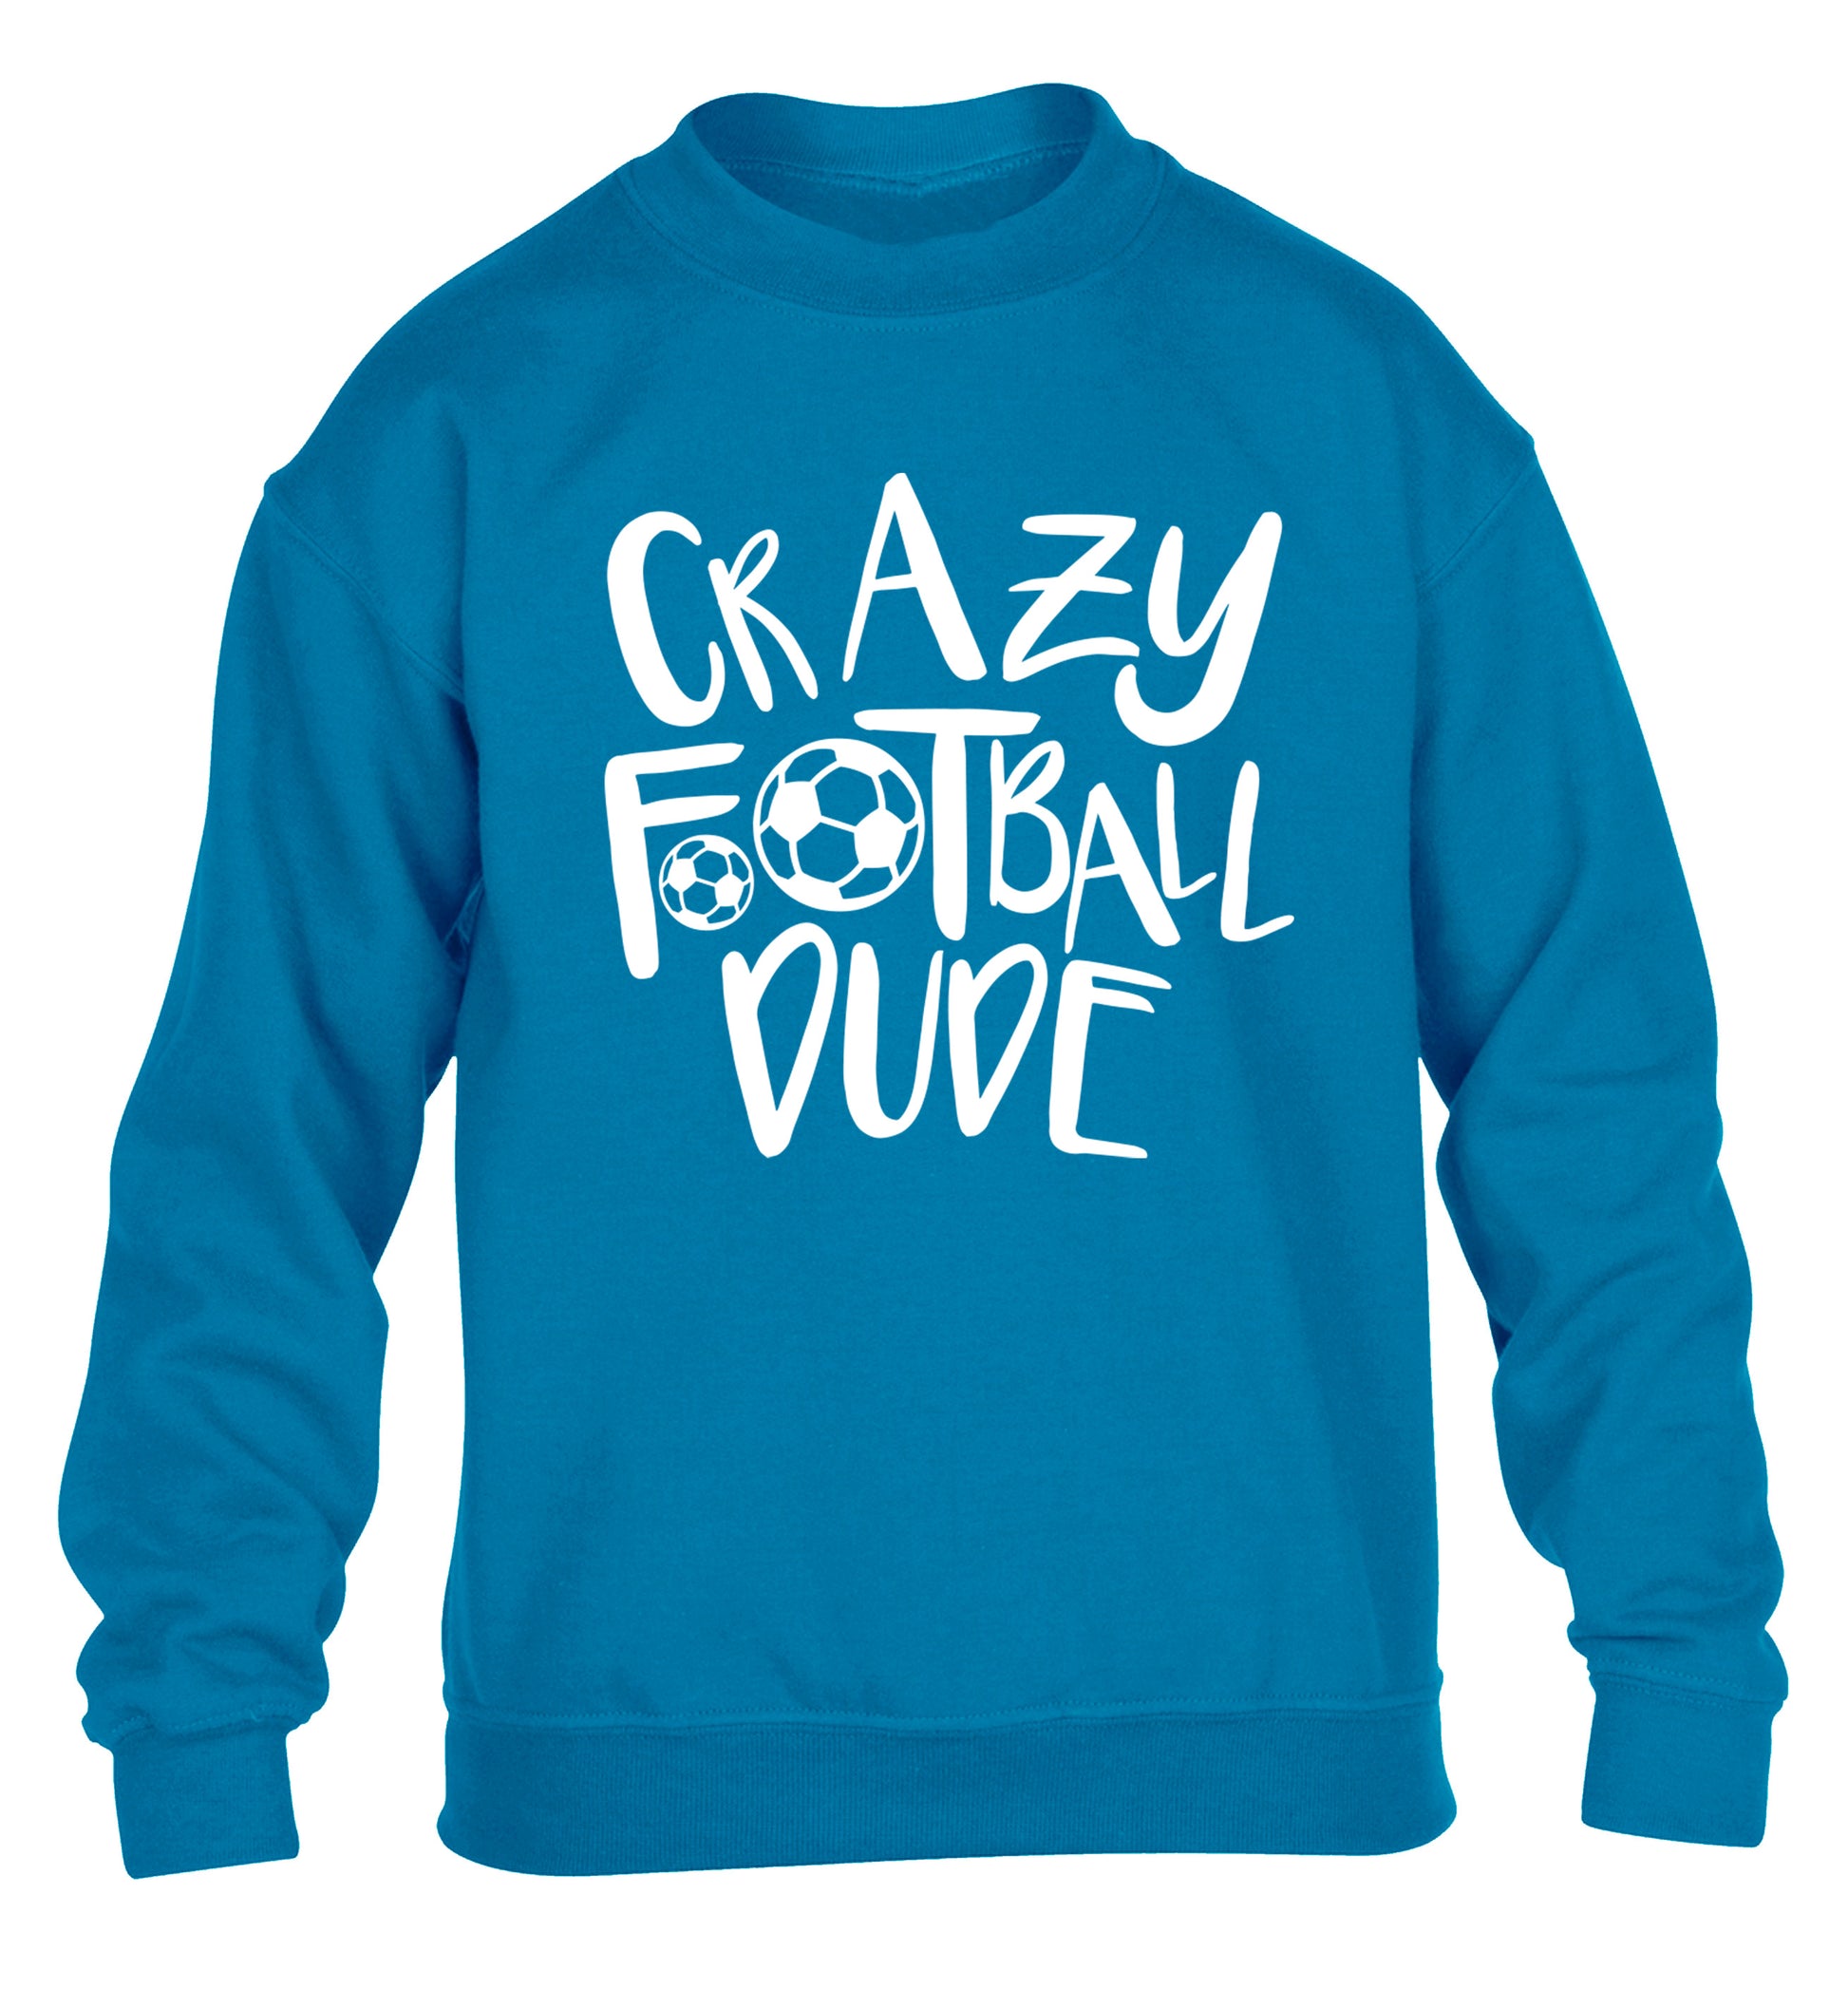 Crazy football dude children's blue sweater 12-14 Years